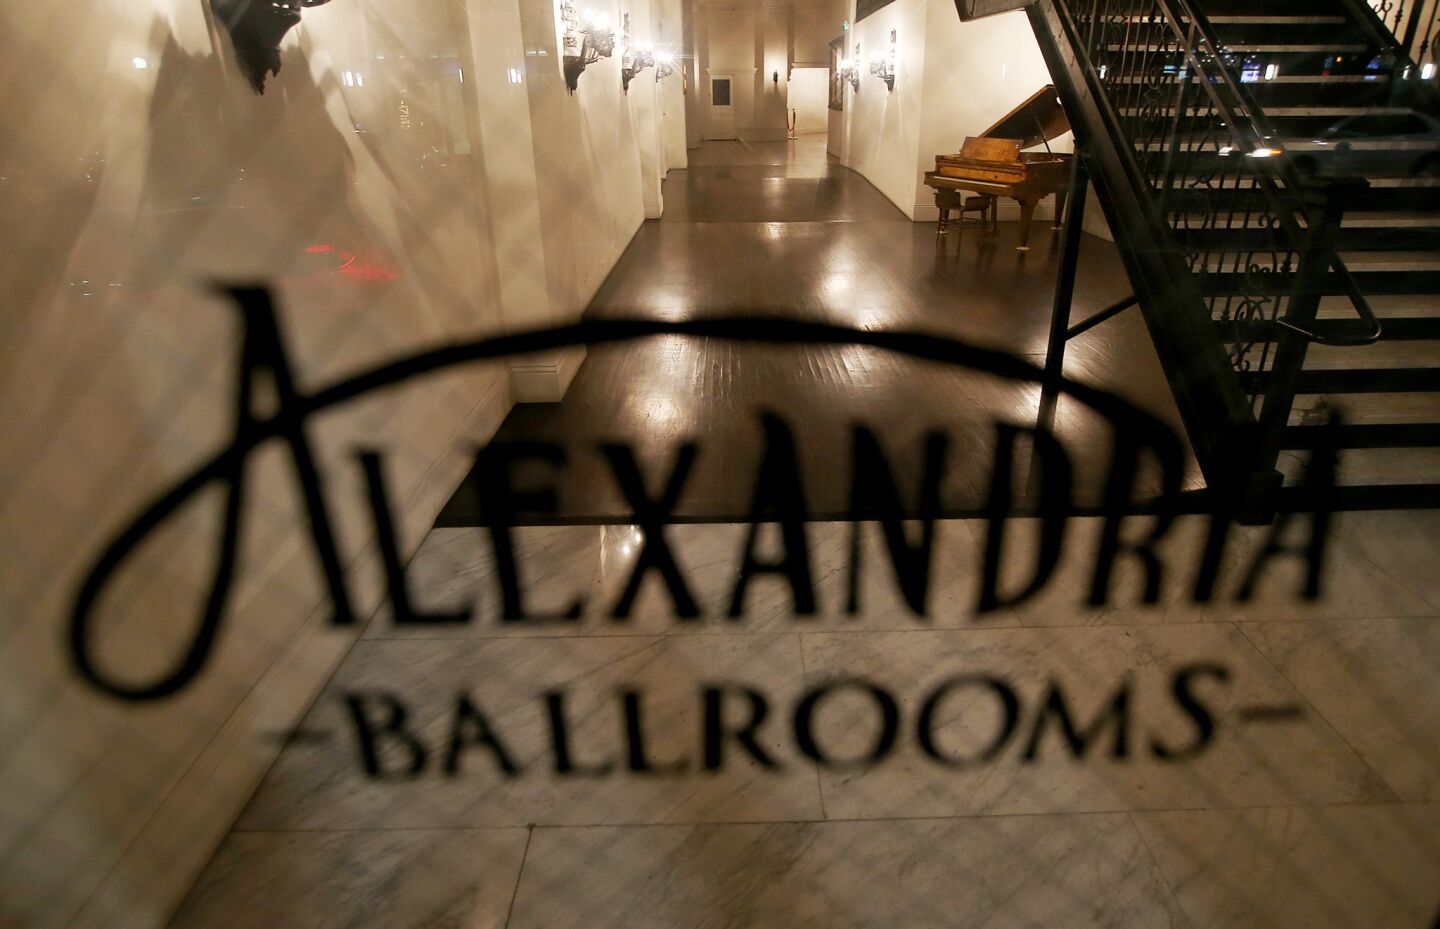 Alexandria Hotel